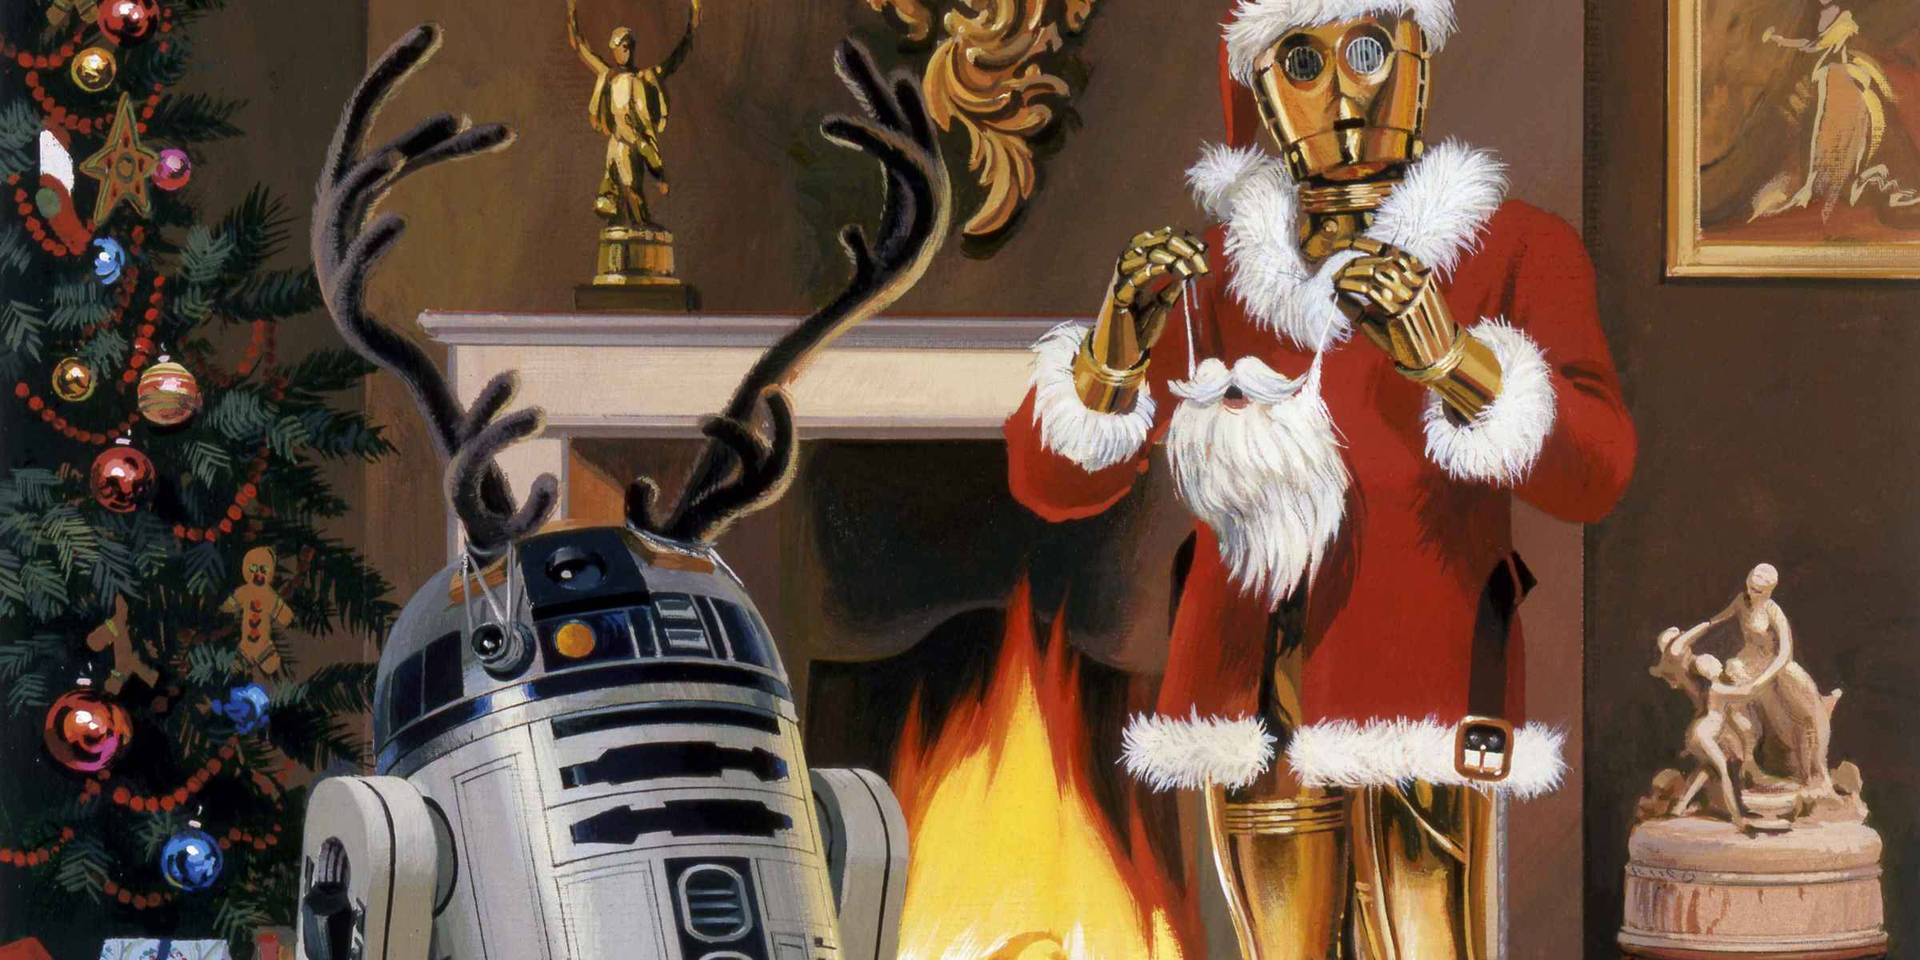 Celebrating The Force Of Christmas! Background